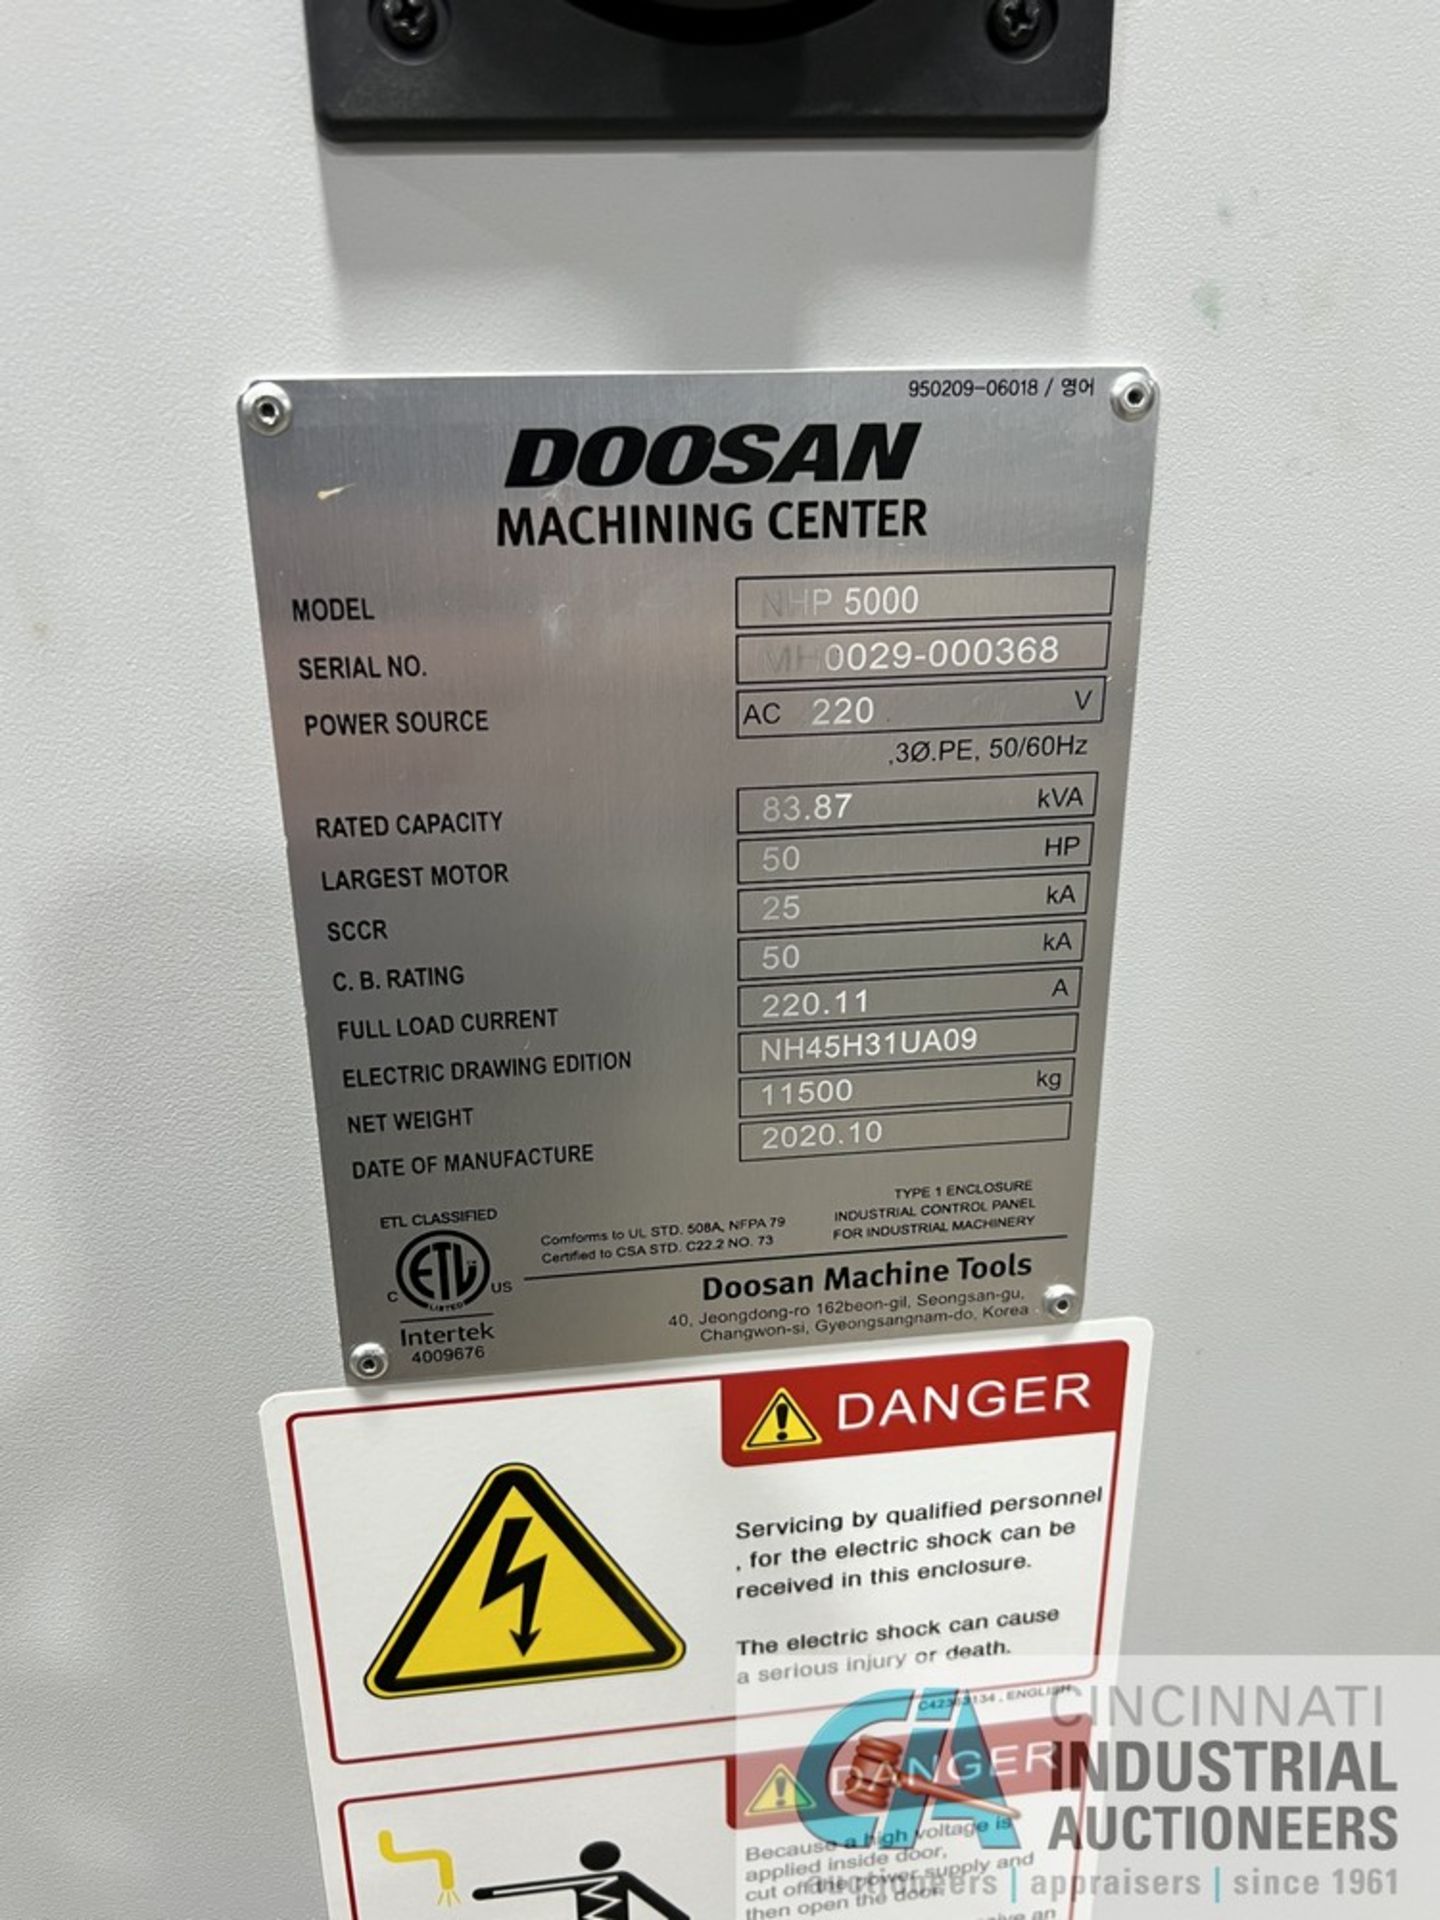 DOOSAN / DN SOLUTIONS MODEL NHP5000 CNC HORIZONTAL MACHINING CENTER; S/N MH0029-000368 (NEW 10/2020) - Image 11 of 32